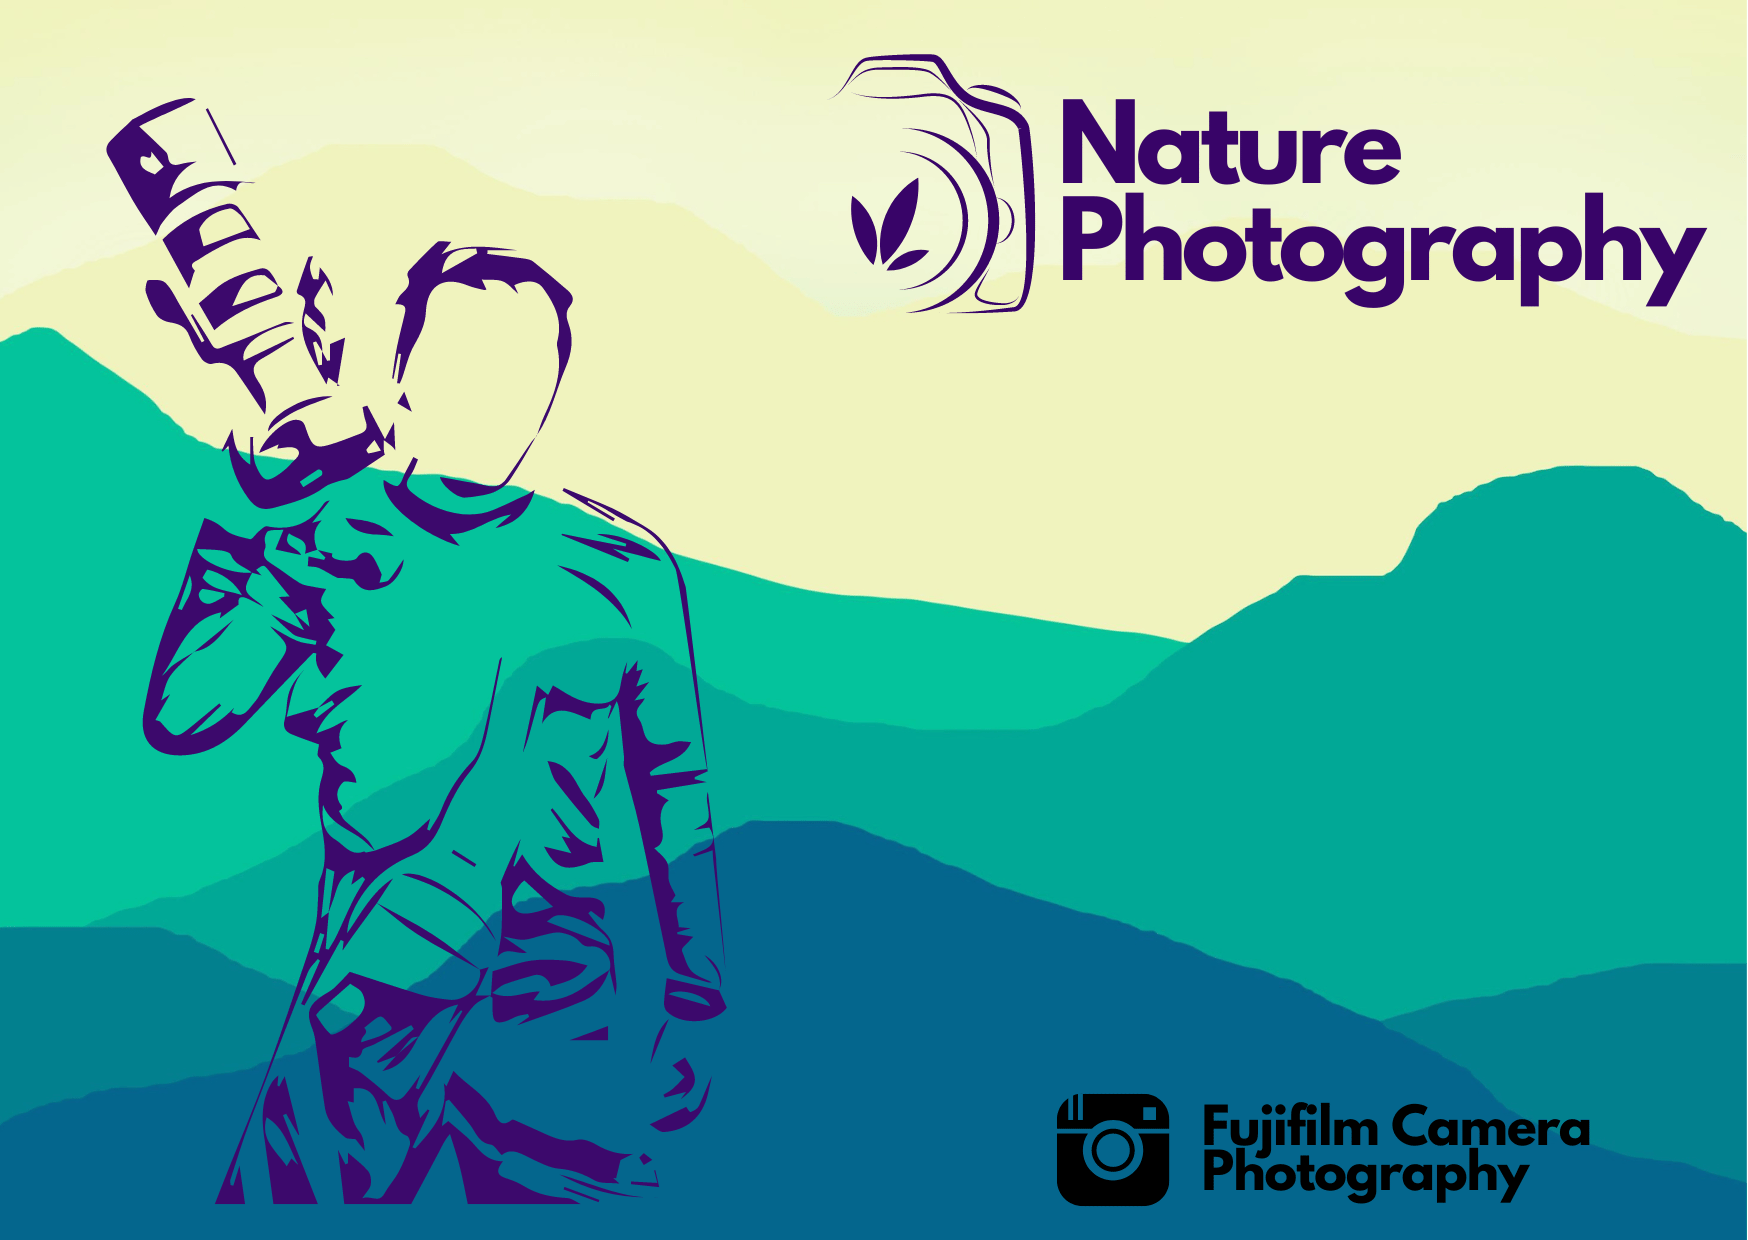 Fujifilm camera photography